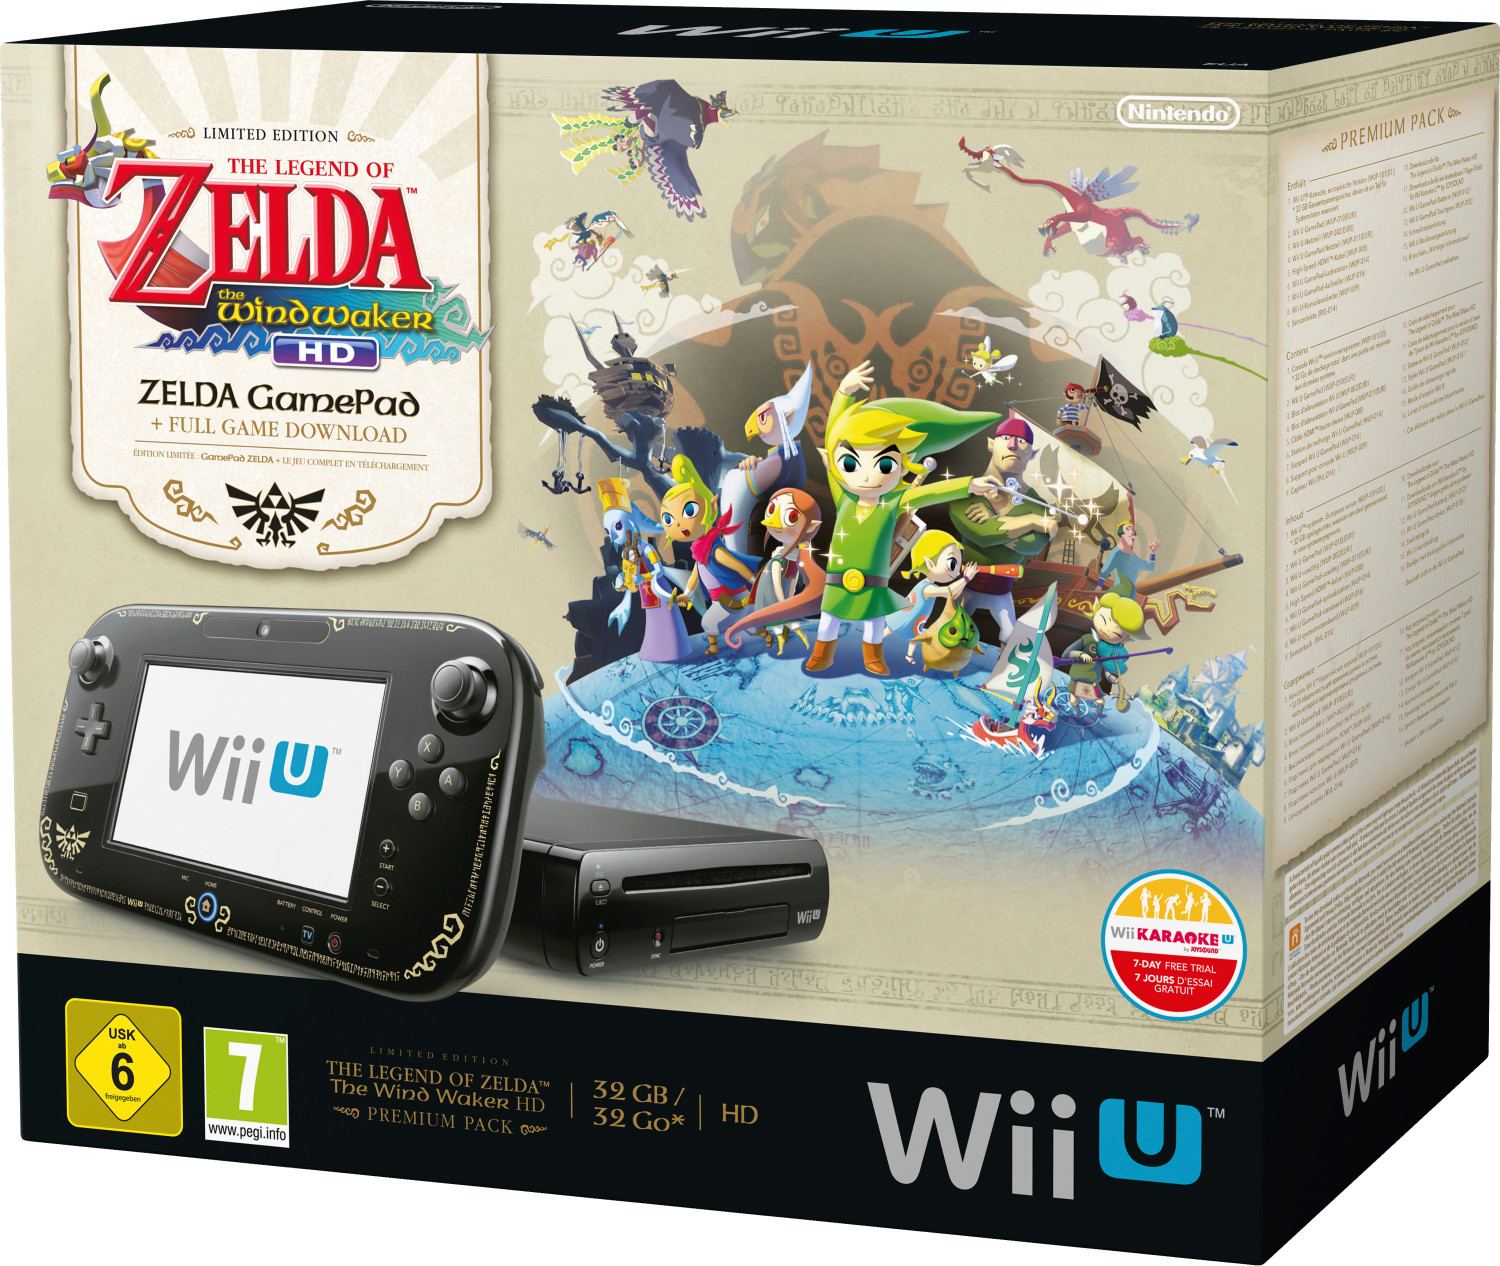 Nintendo Wii U The Legend of Zelda: The Wind Waker HD Premium Pack Limited Edition